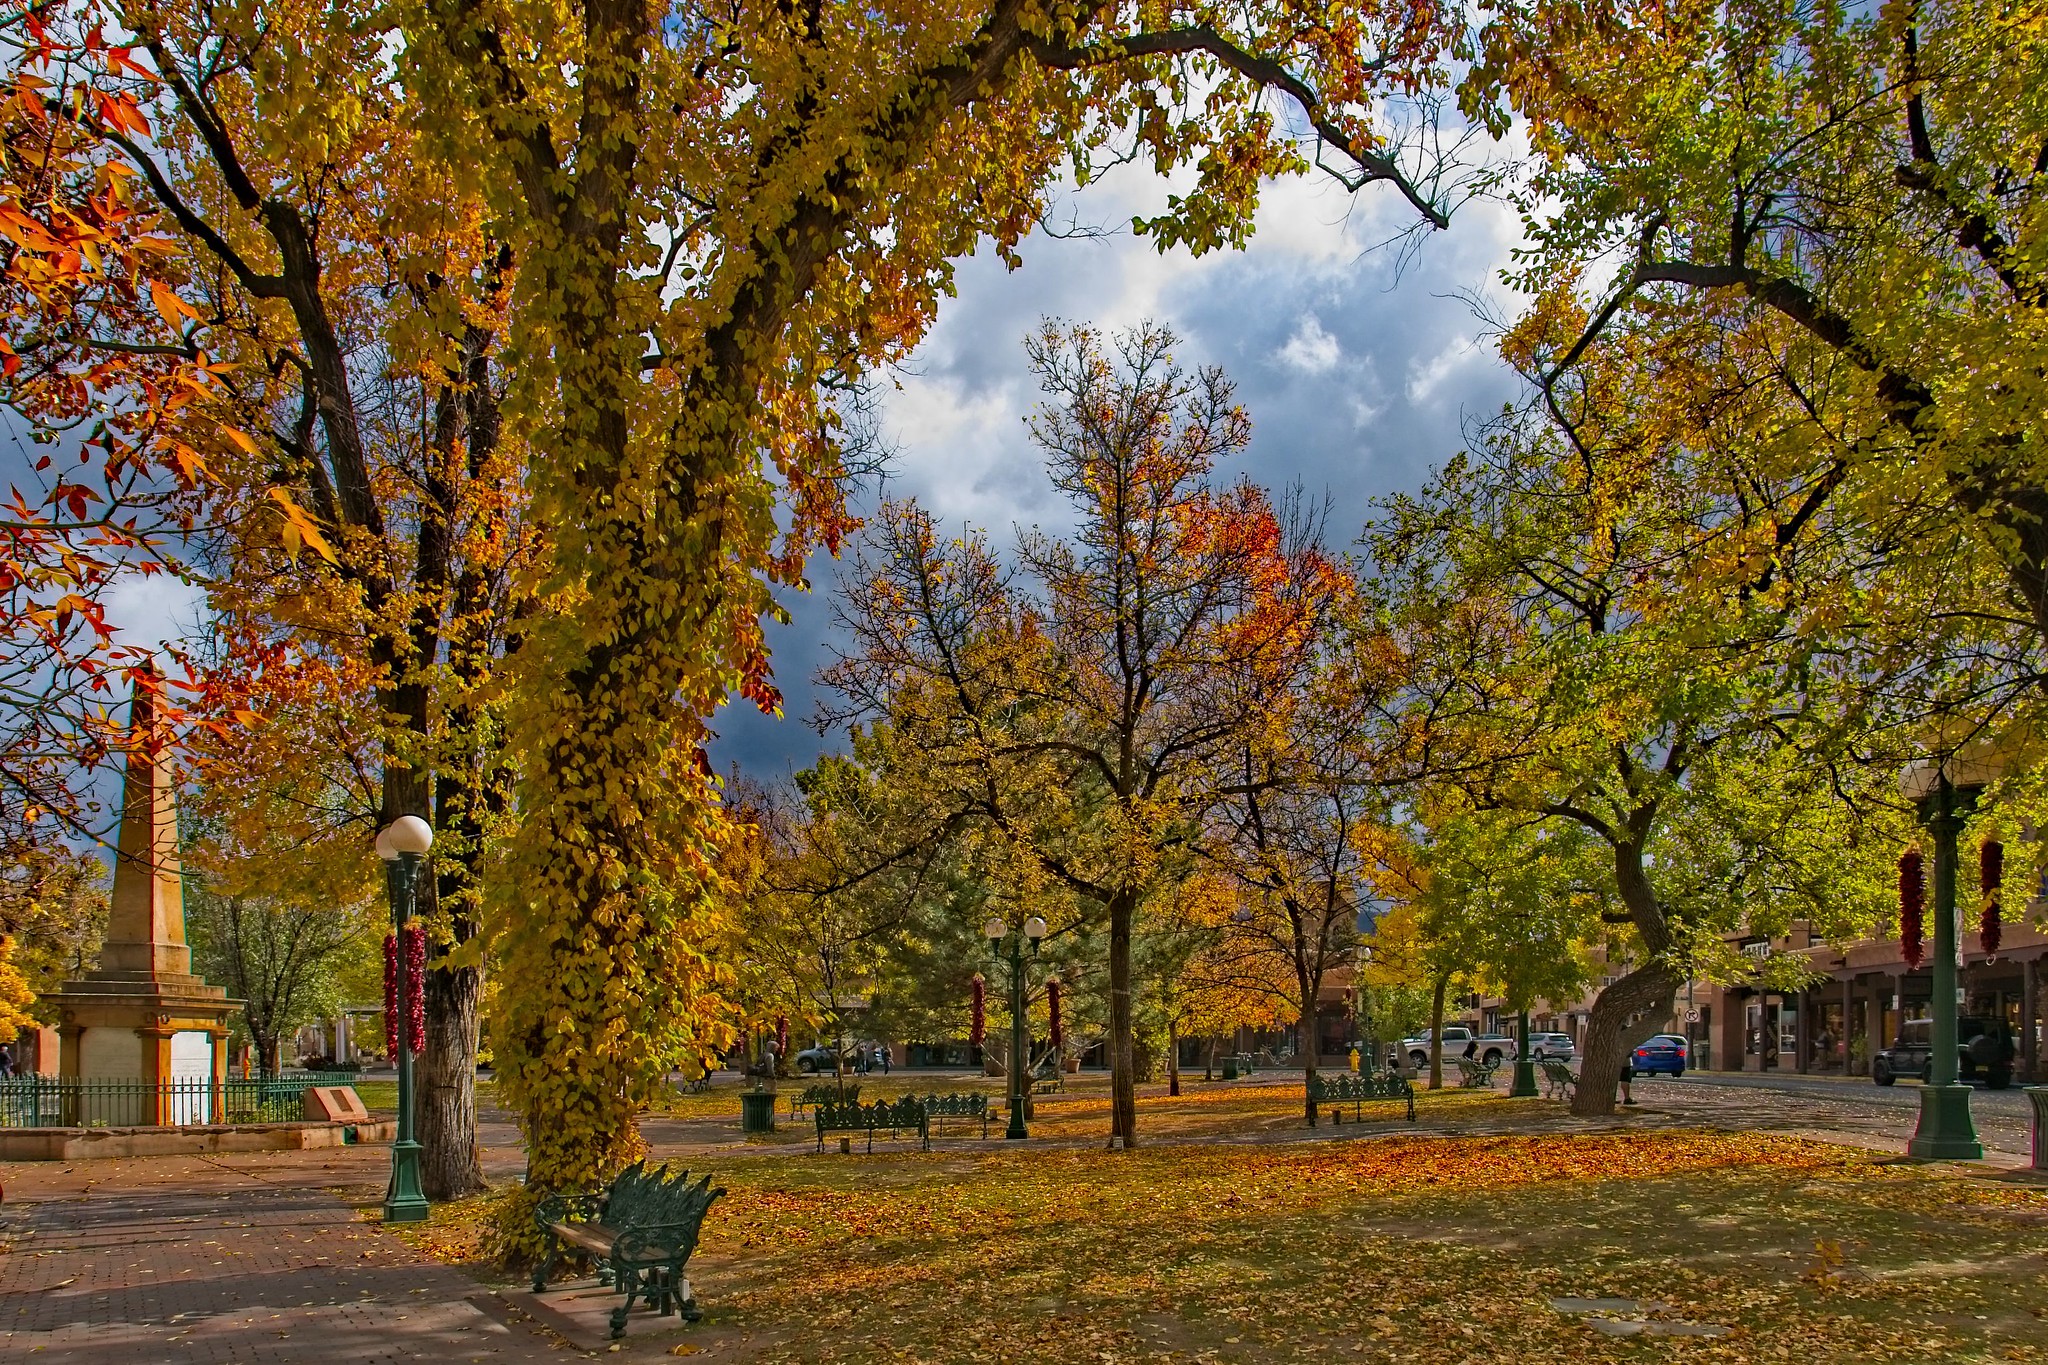 Santa Fe Plaza in the fall.